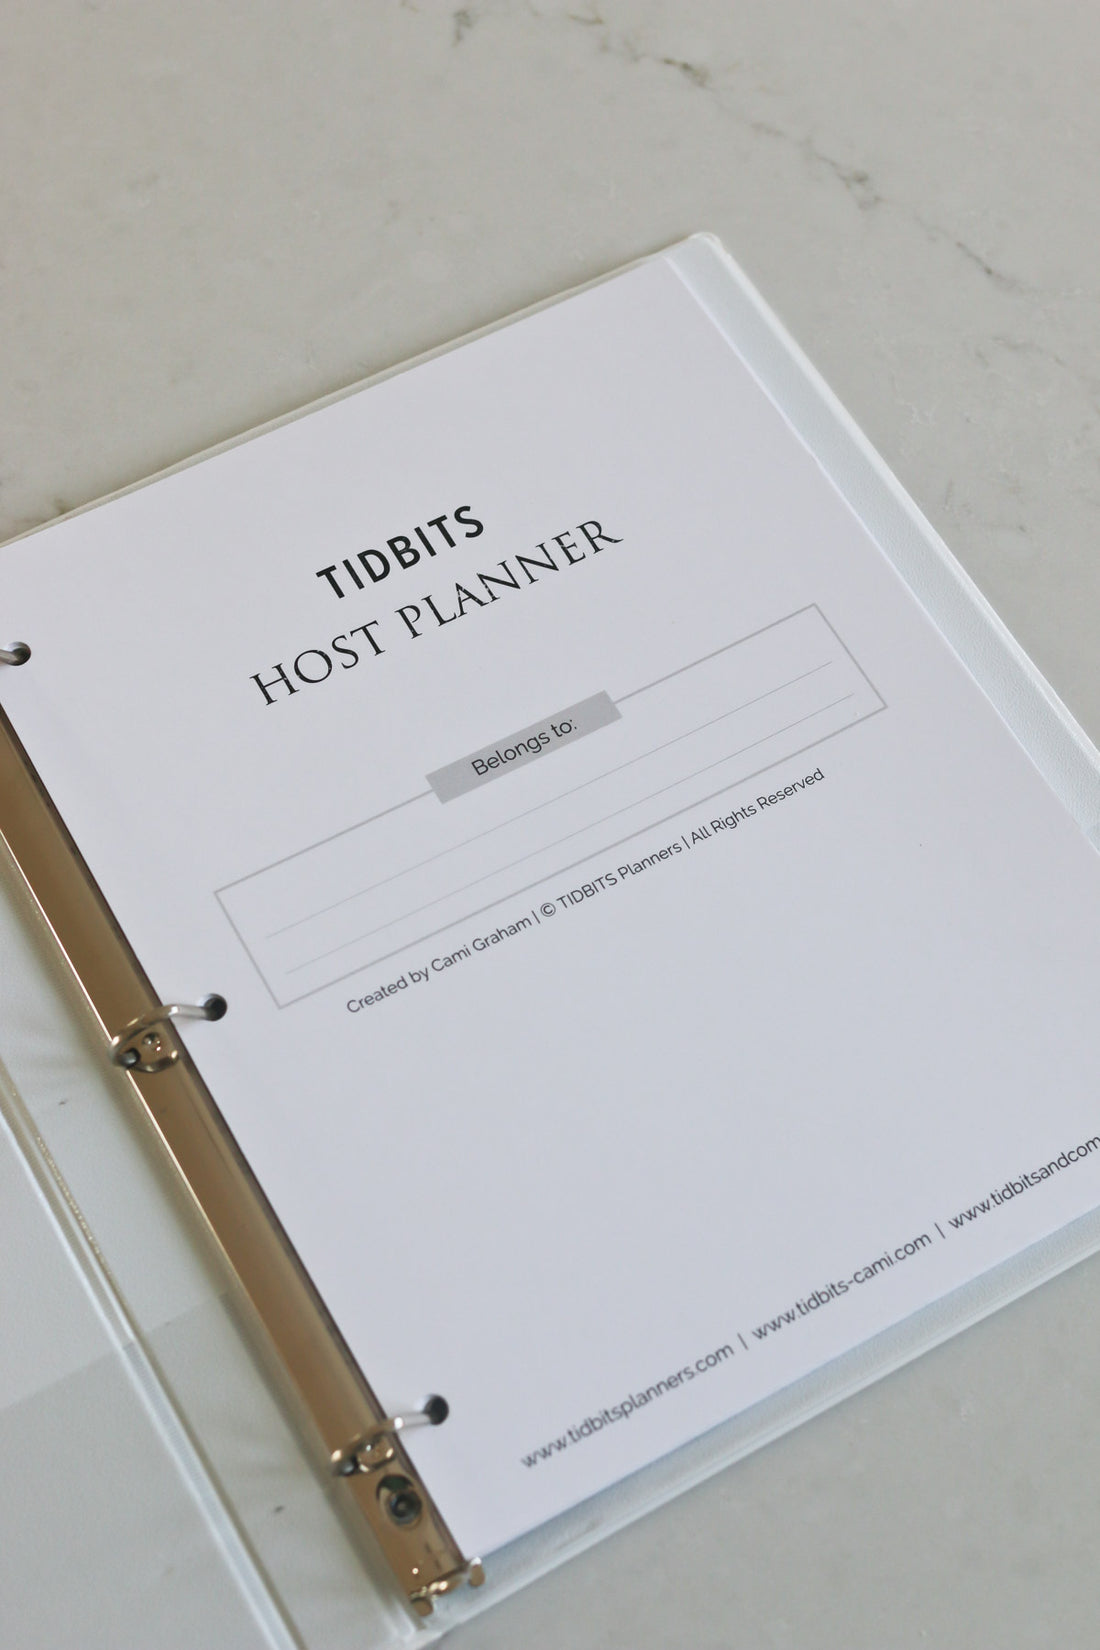 The Host Planner Printable